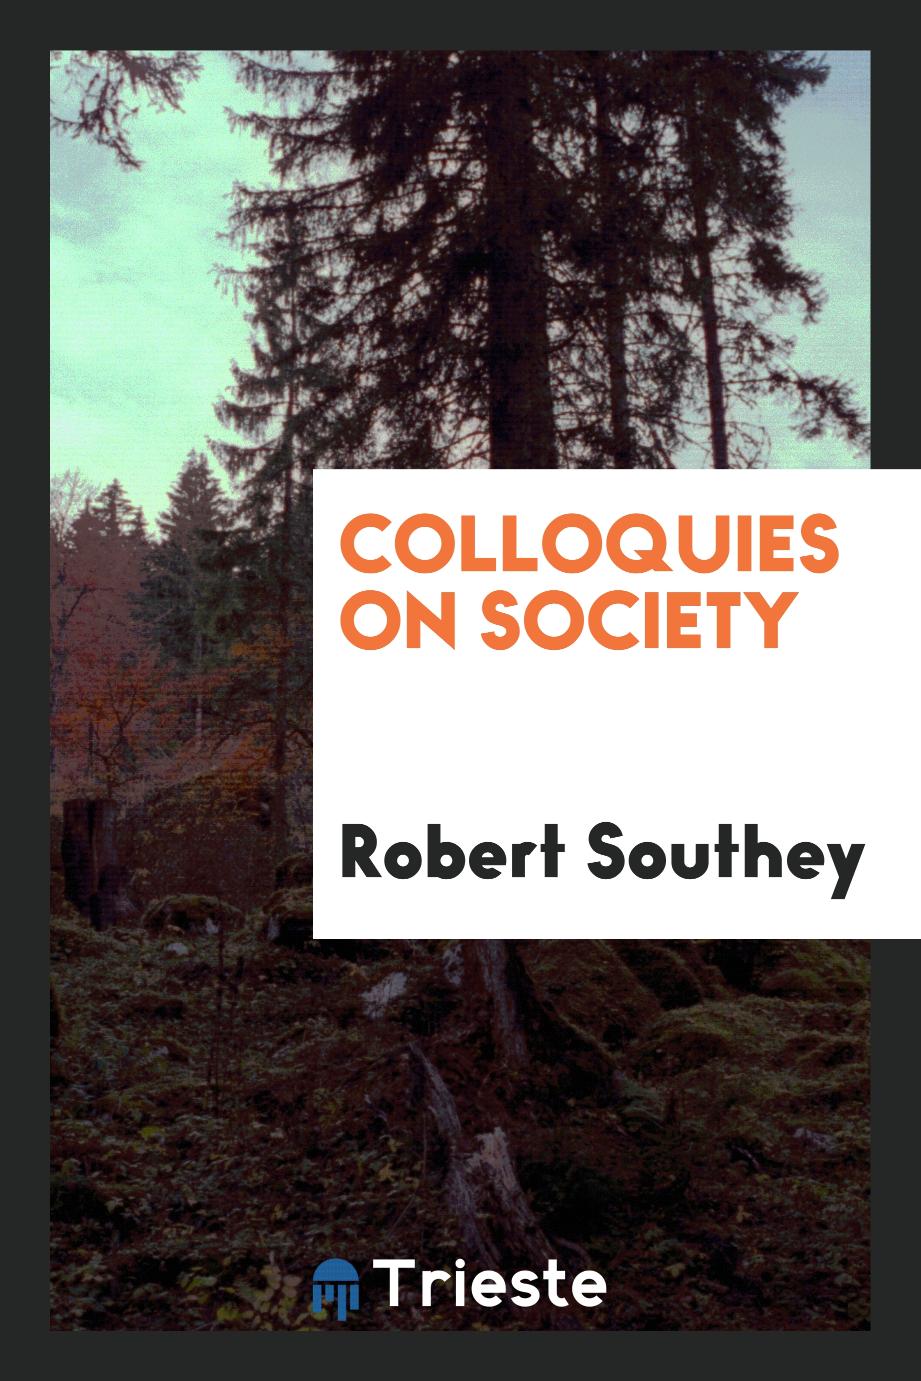 Colloquies on society